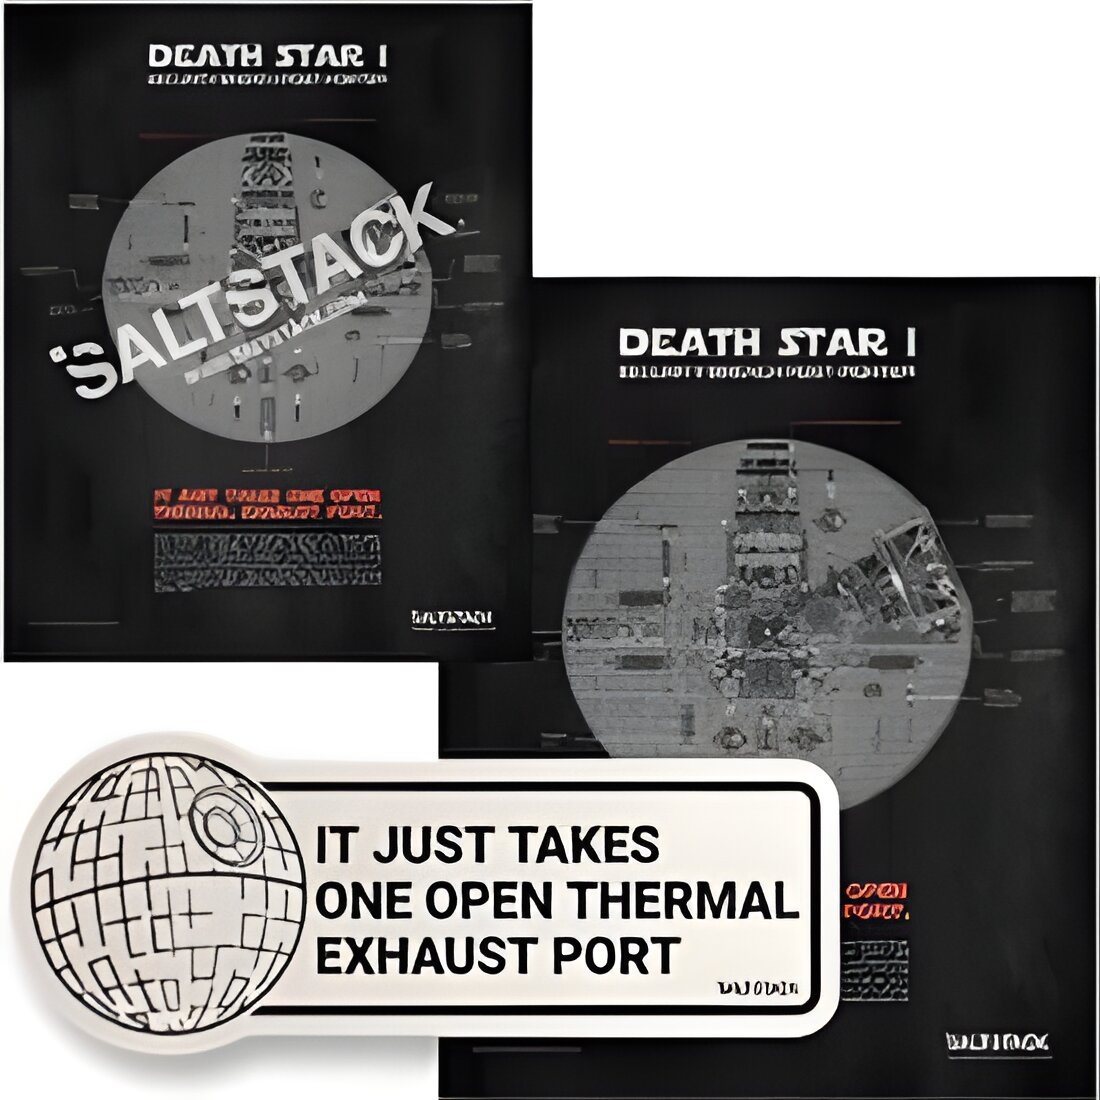 Free SaltStack Death Star Poster